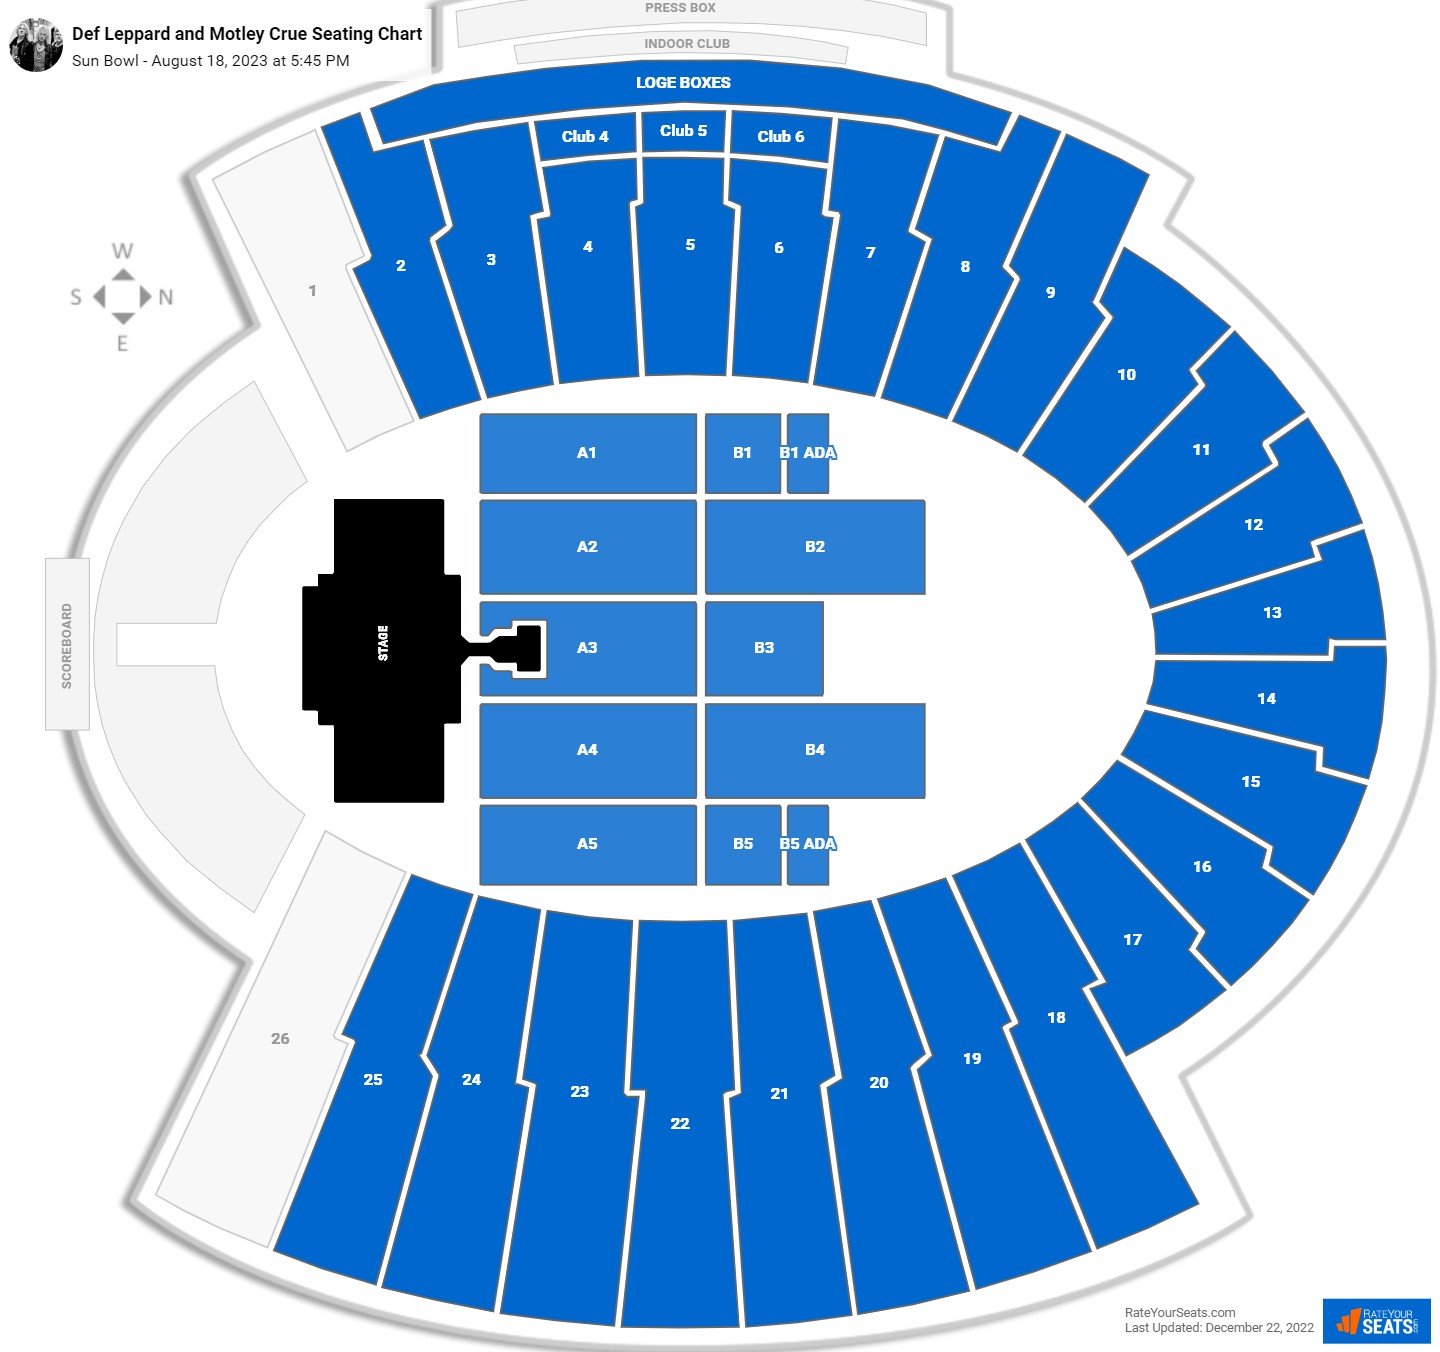 Sun Bowl Concert Seating Chart